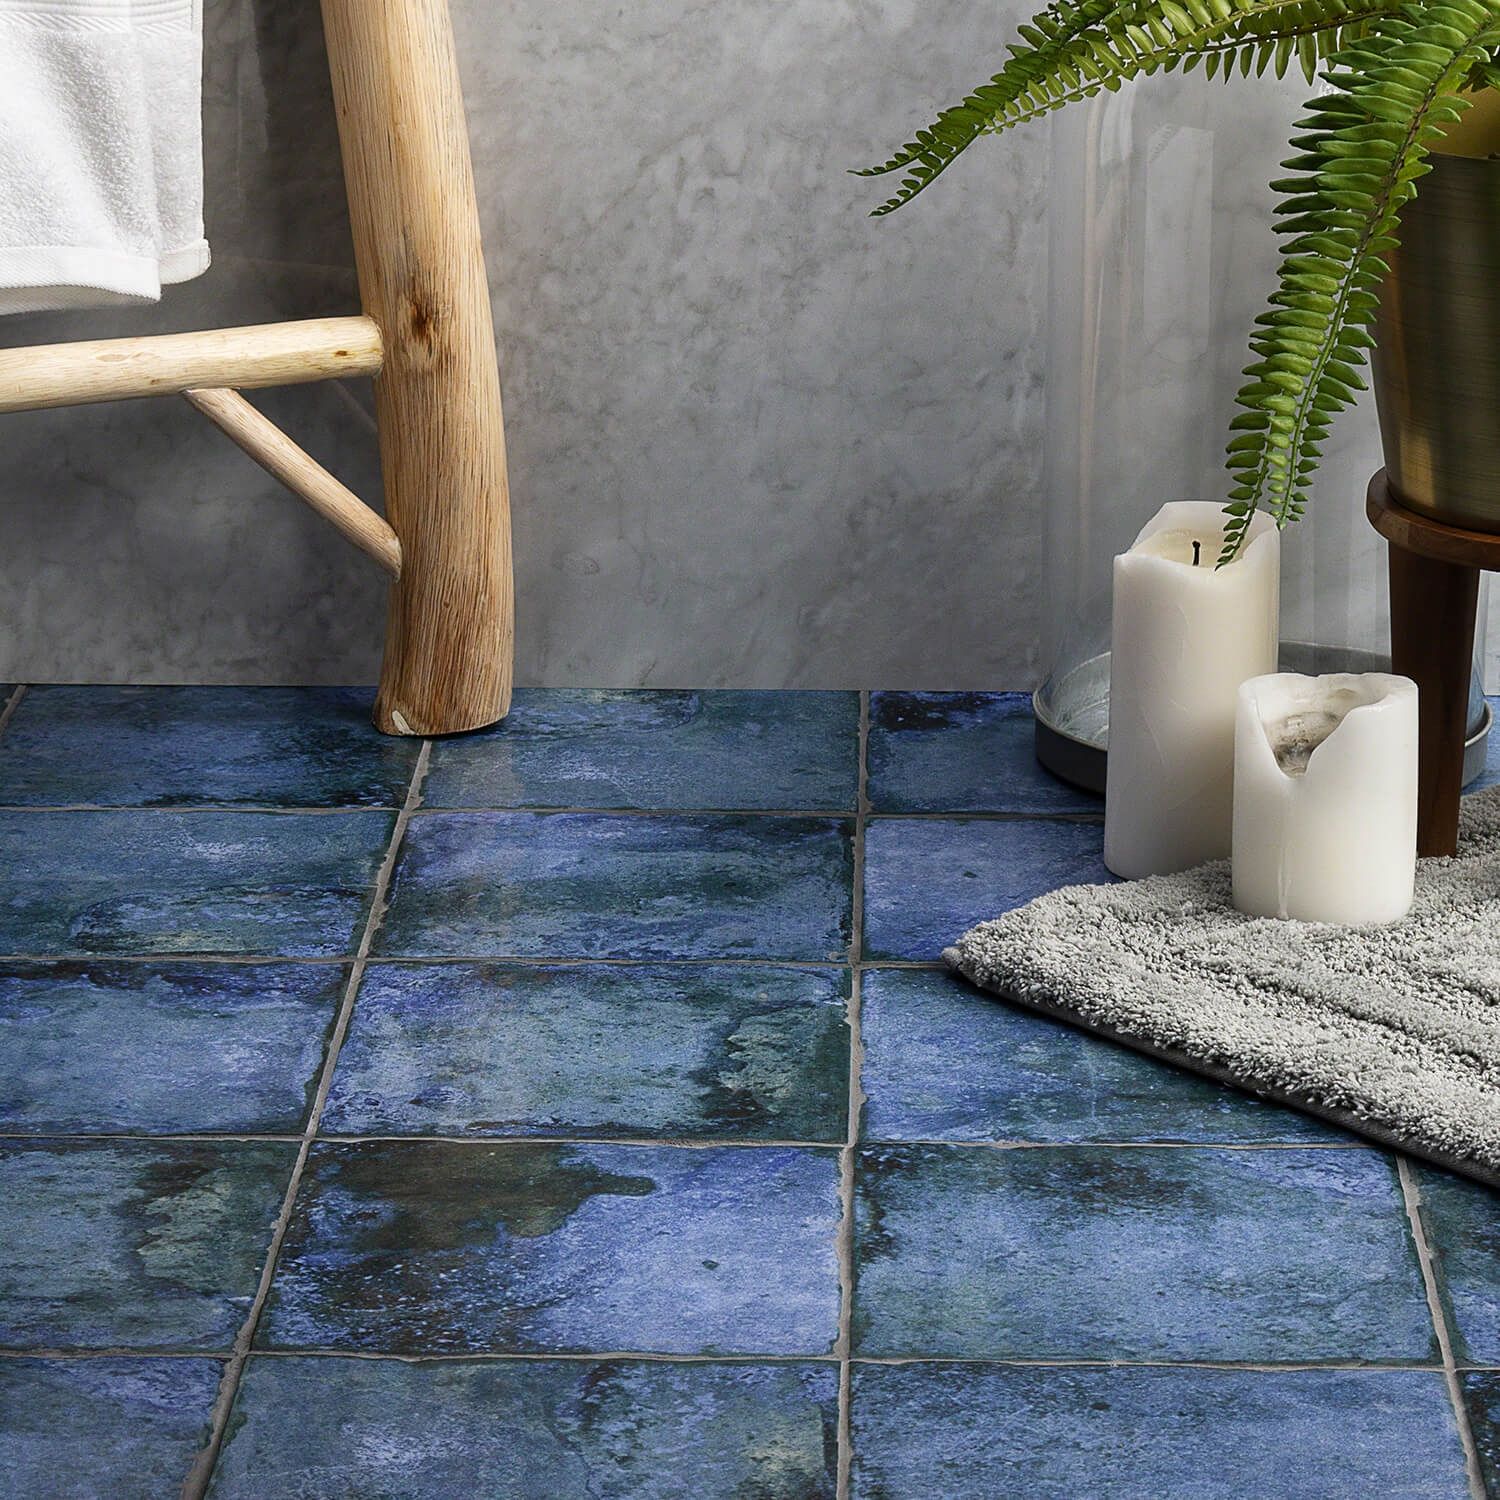 Blue Bathroom Floor Tiles